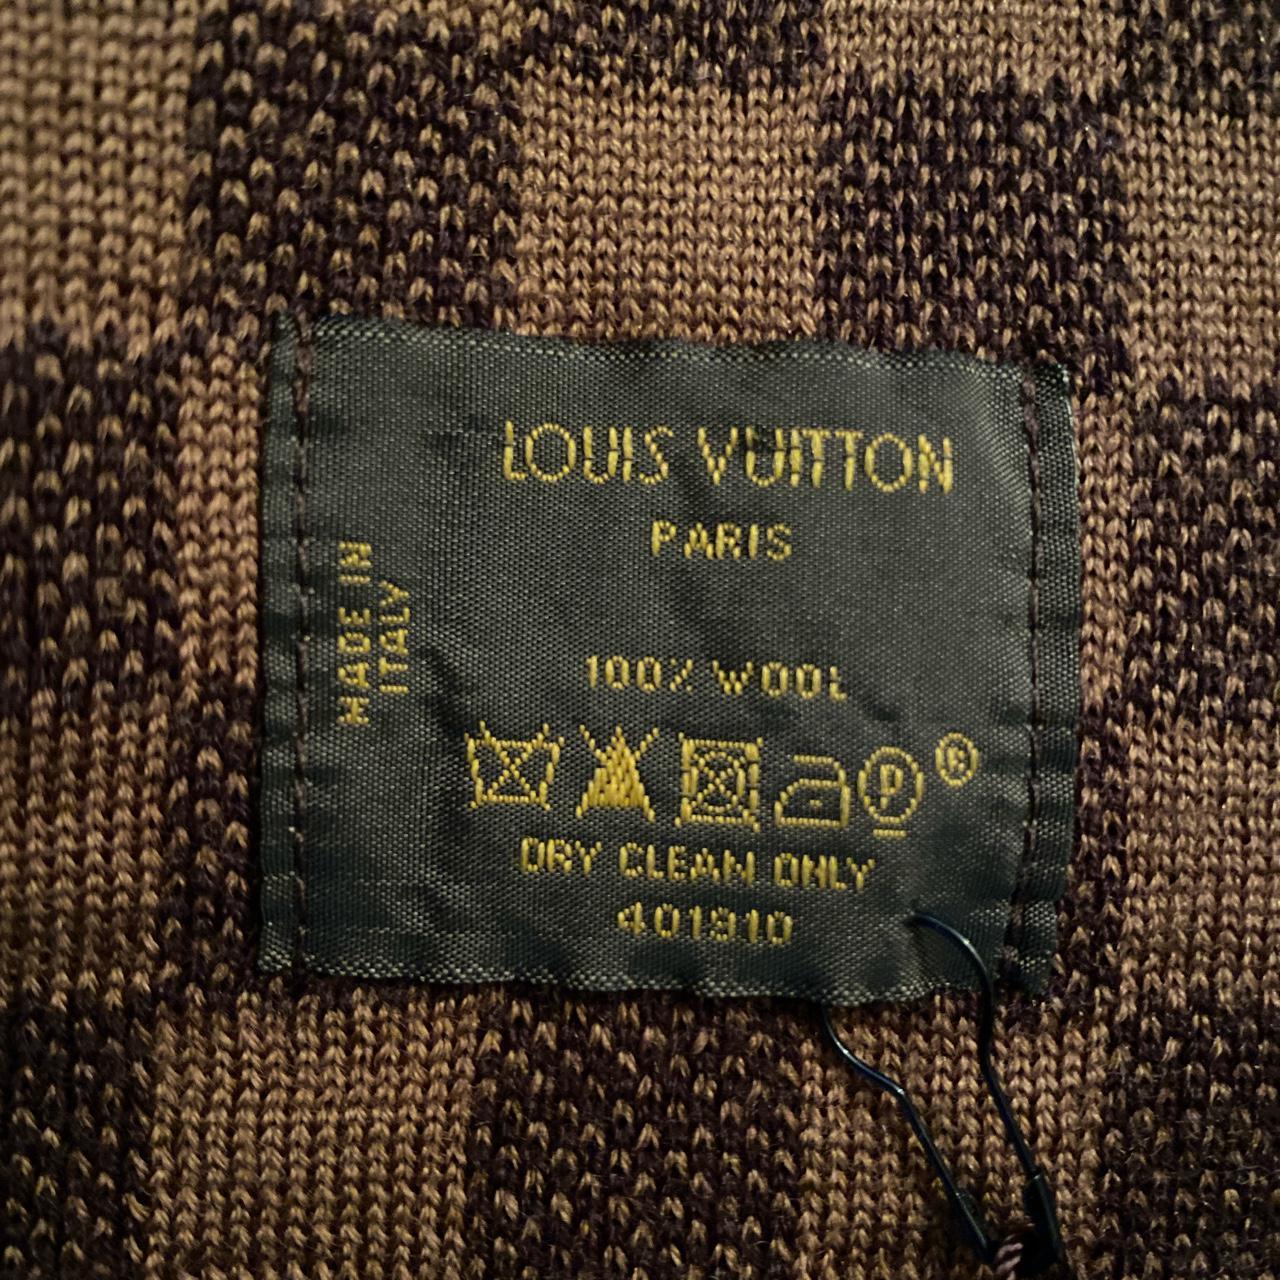 Authentic Louis Vuitton scarf look more black in - Depop